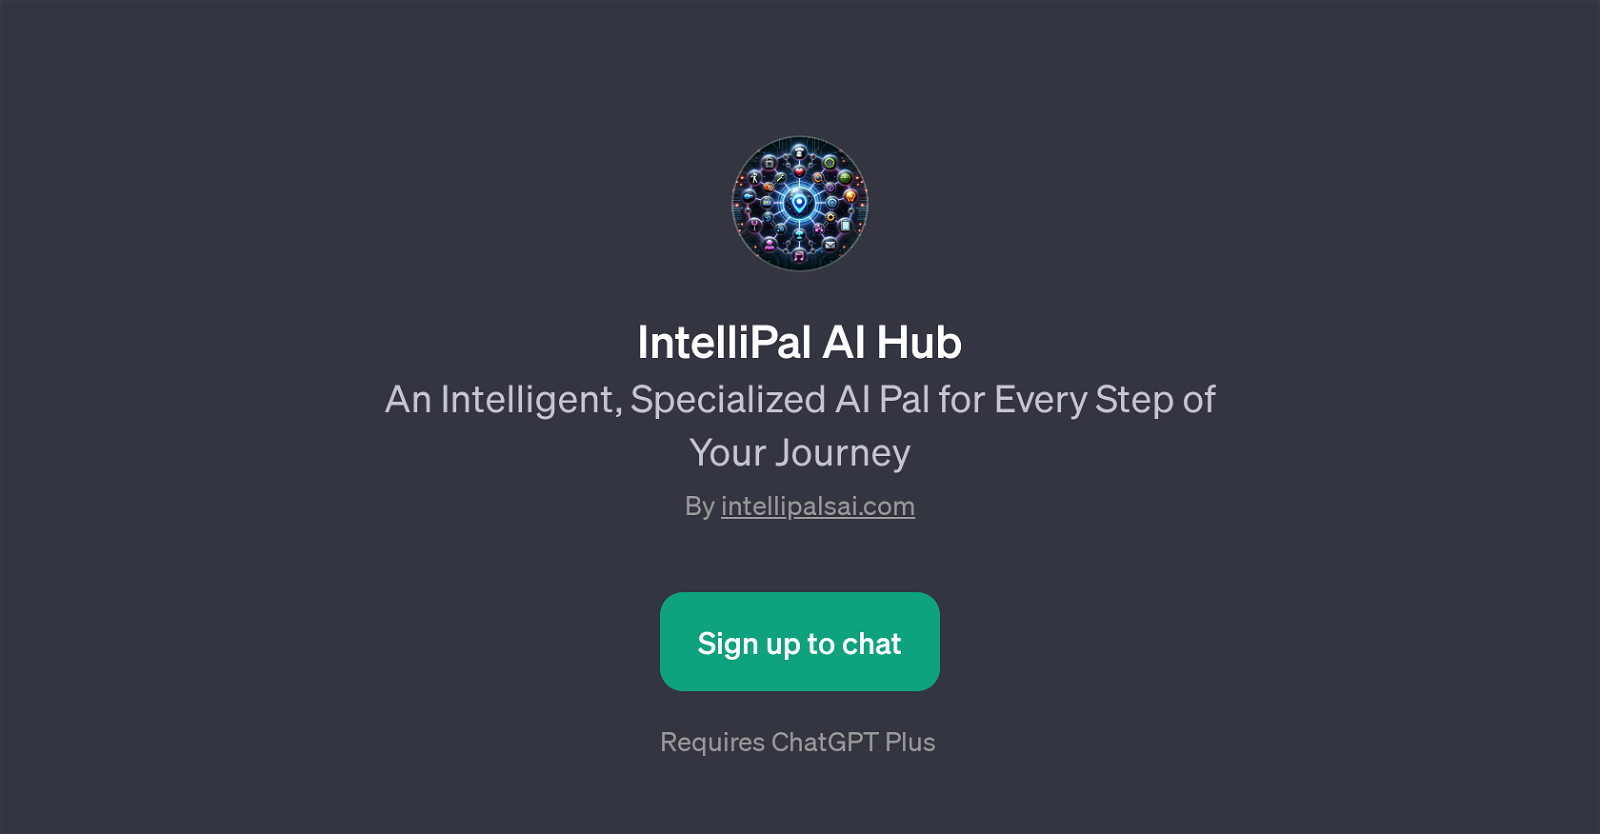 IntelliPal AI Hub website